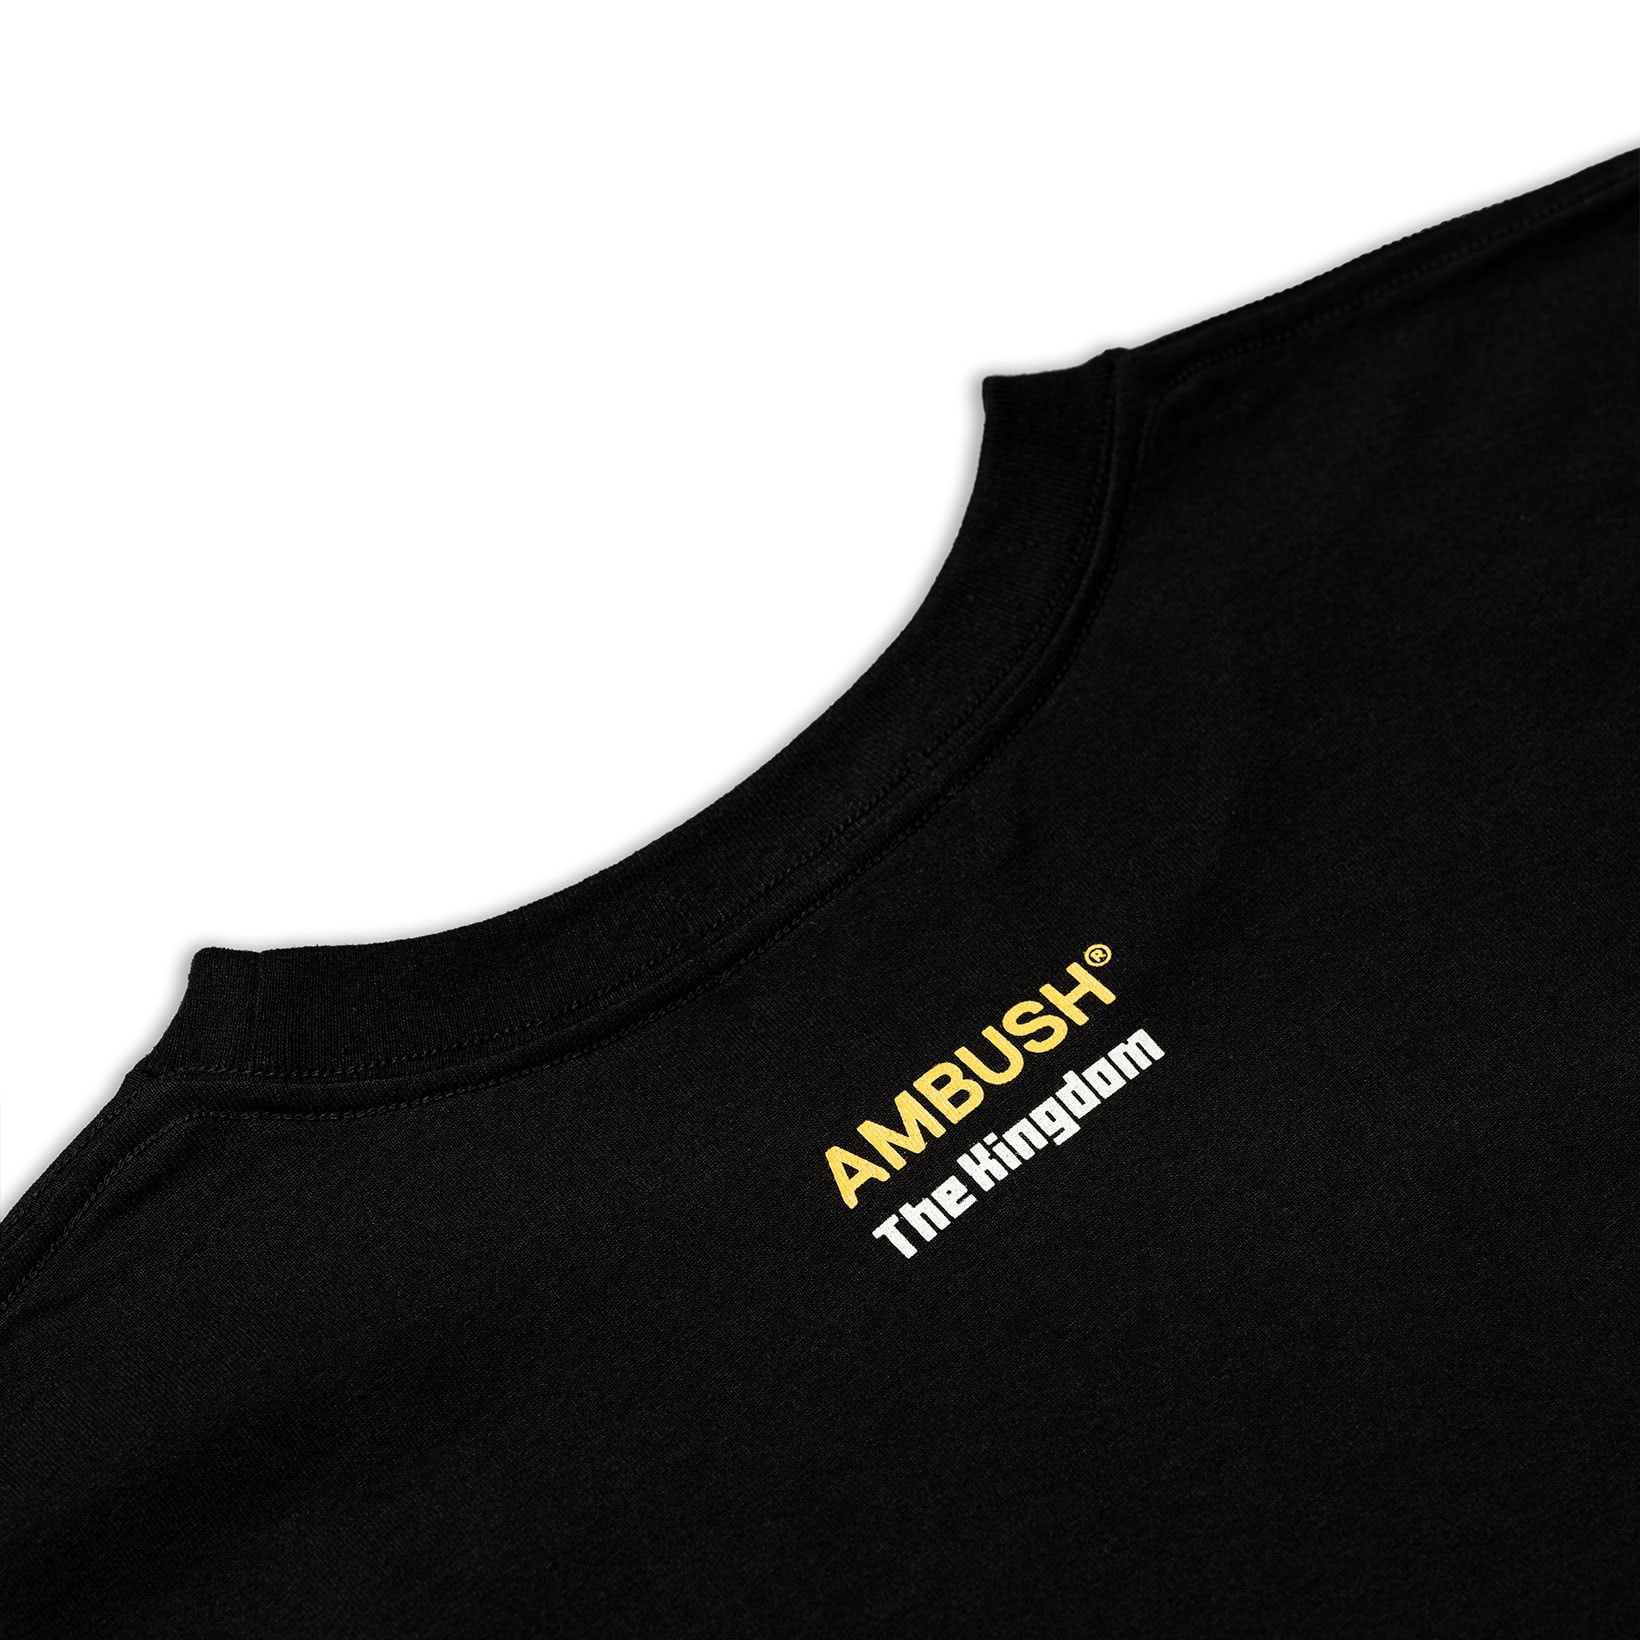 AMBUSH Monkey Kingdom NFT Collaboration T-shirt Metaverse Launch Info